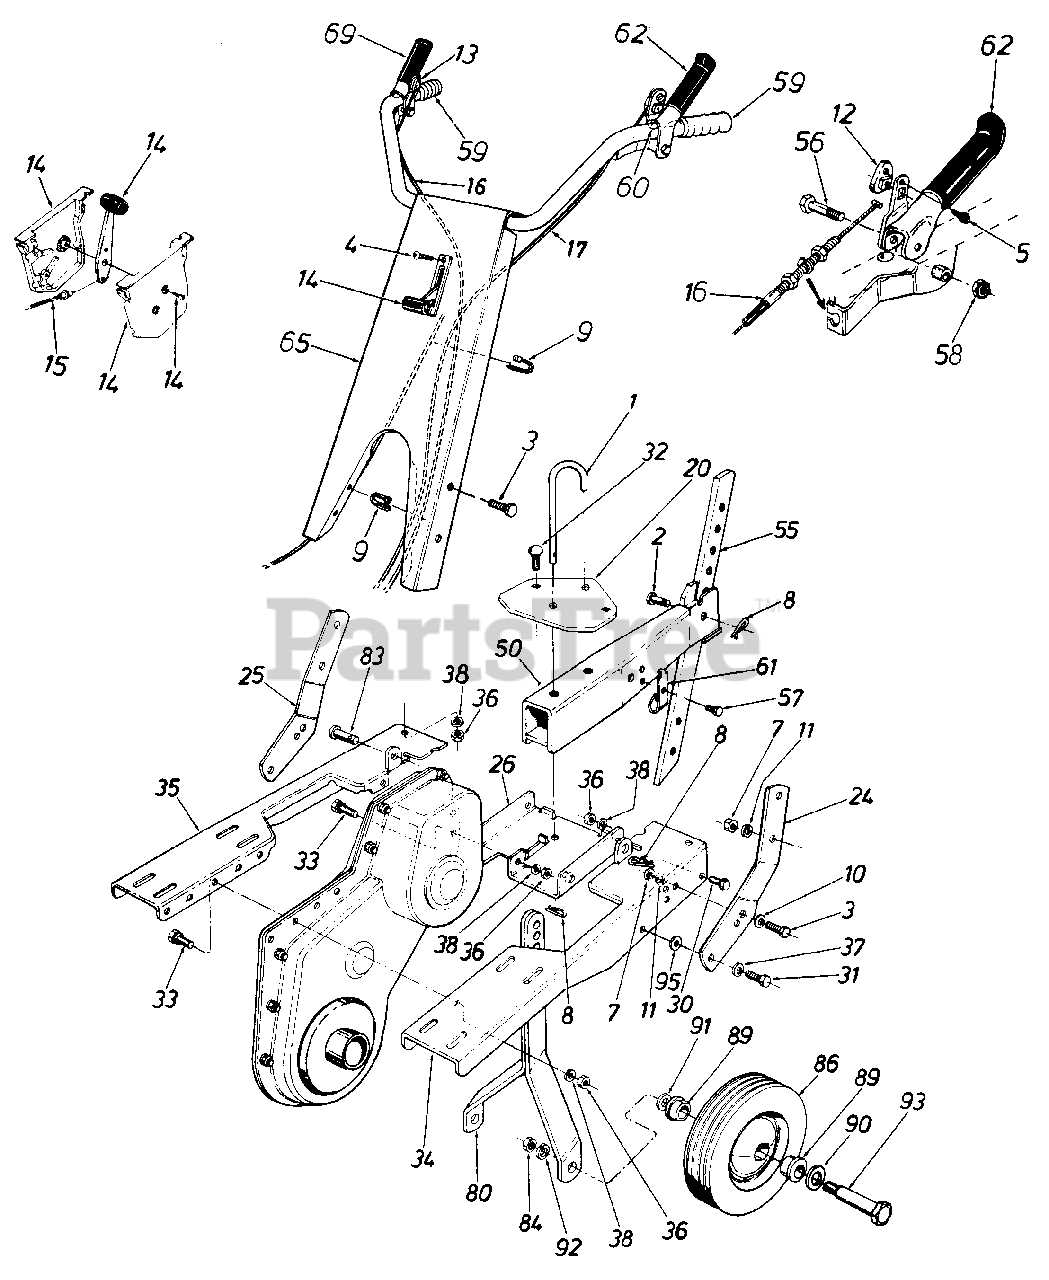 Engine Components of a Craftsman Rototiller